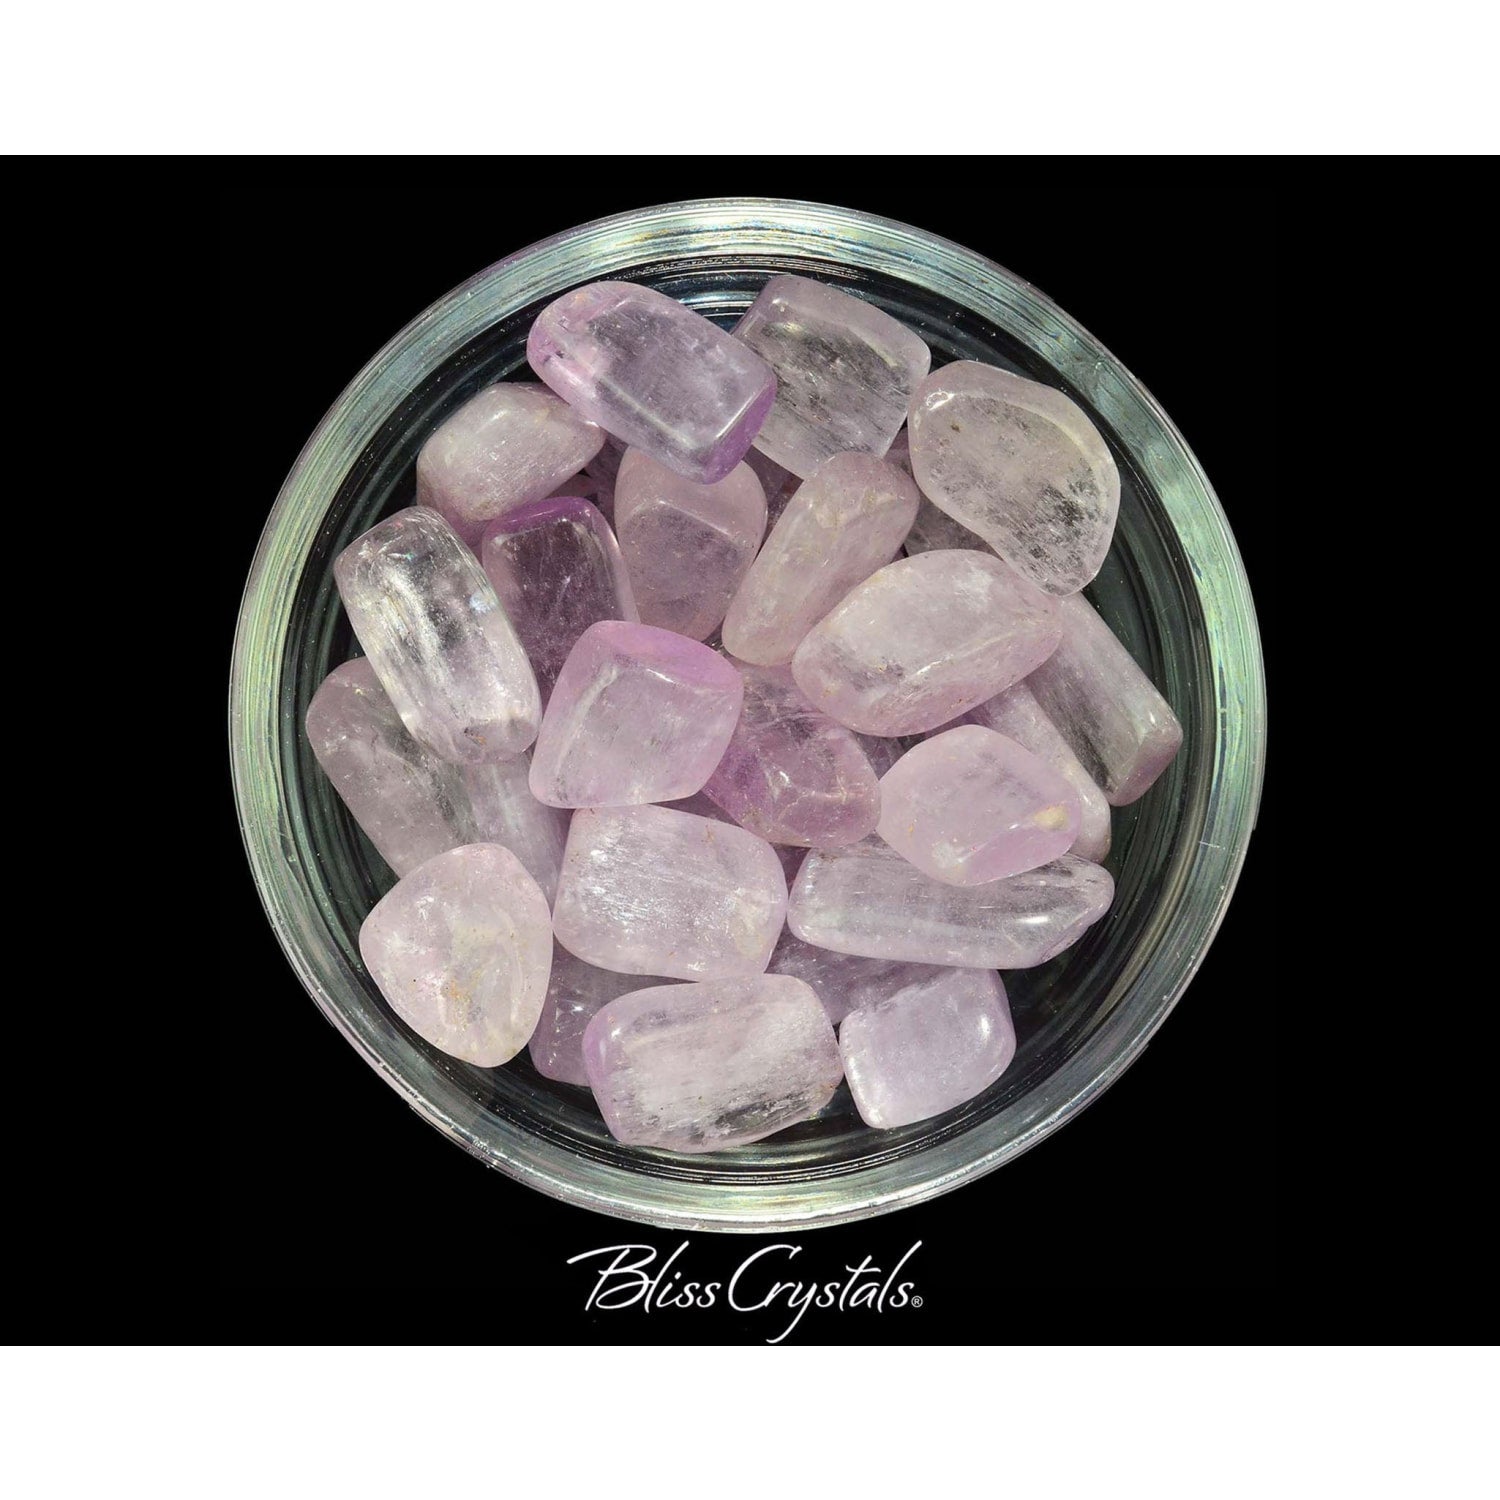 TOMYEUS Pink White Purple Crystal Quartz Natural Stone Streche